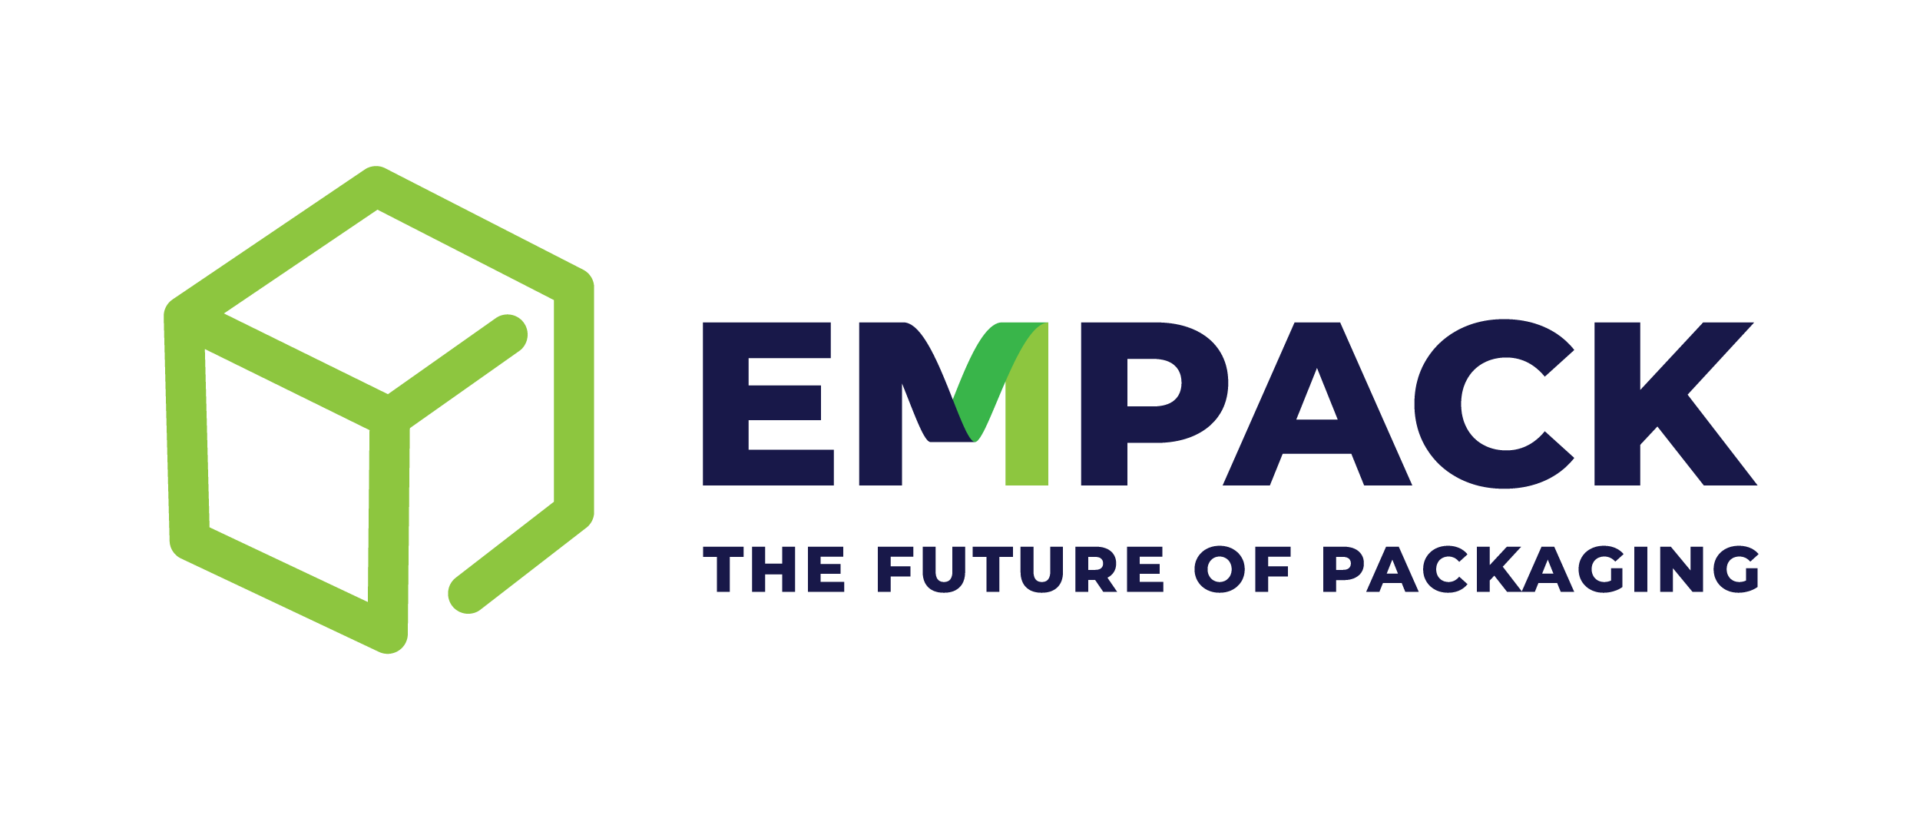 Empack_logo-2020_RGB_HR-transparant.png